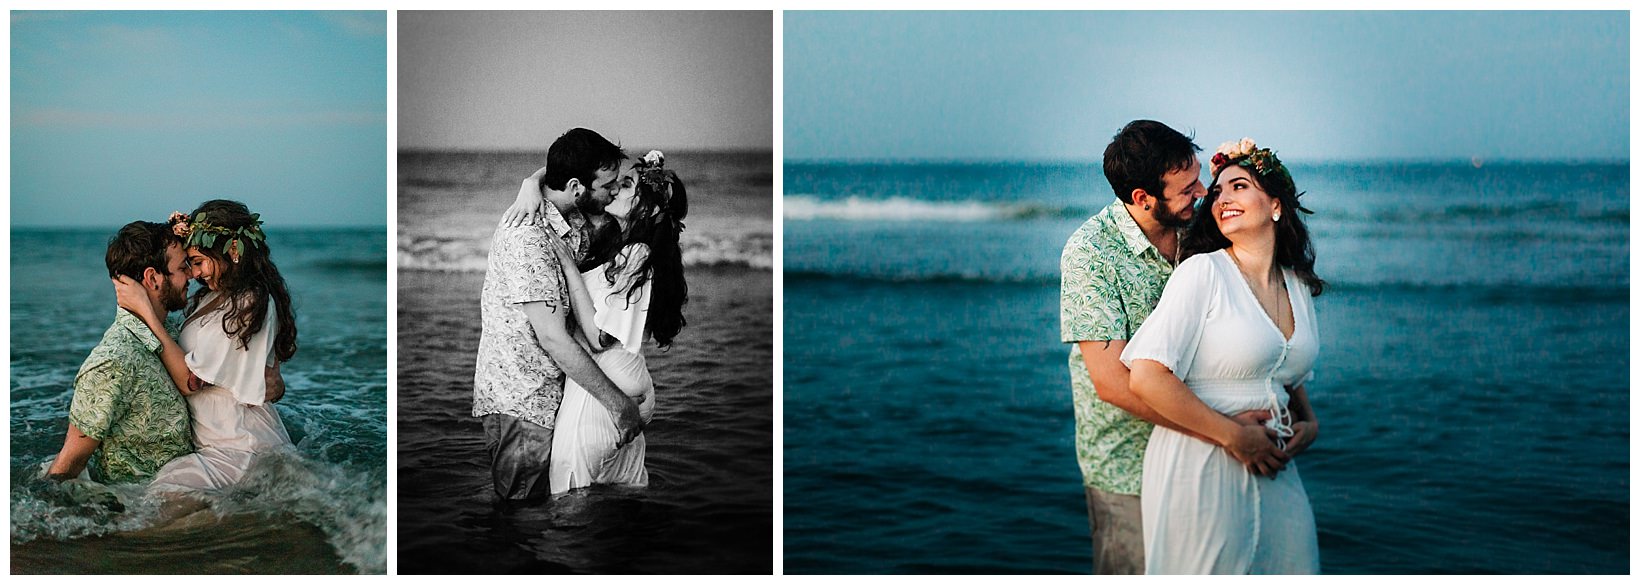 Virginia beachy indie elopement wedding photographer couple inspiration in the ocean water